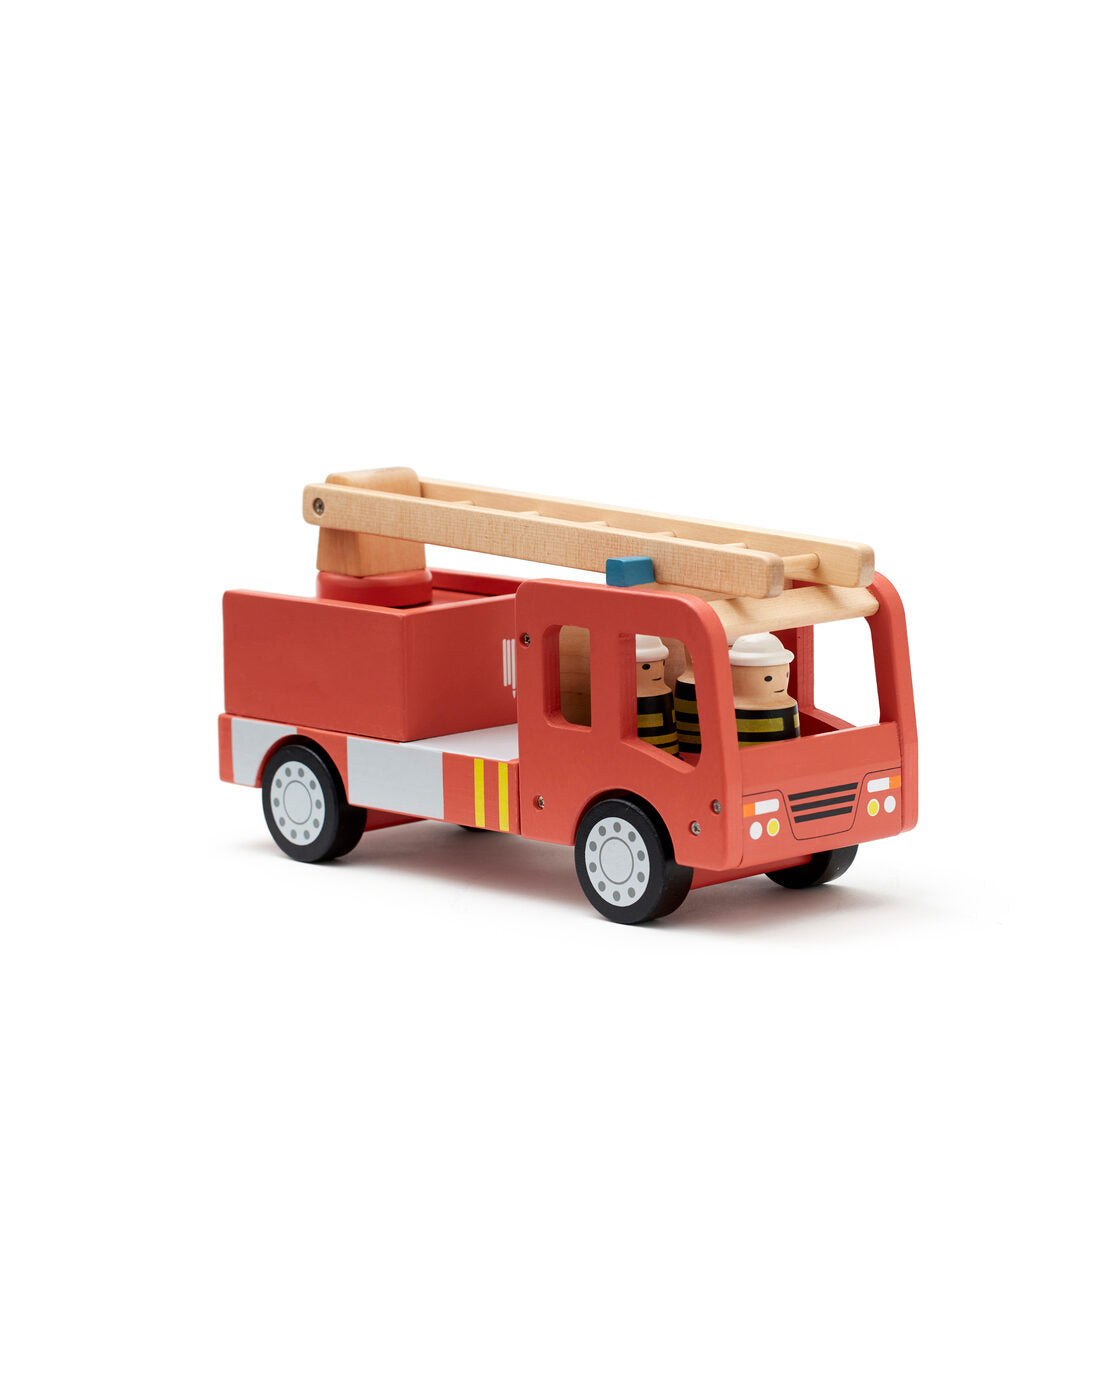 Toy fire truck/Zjarrfikse druri-Kid's Concept